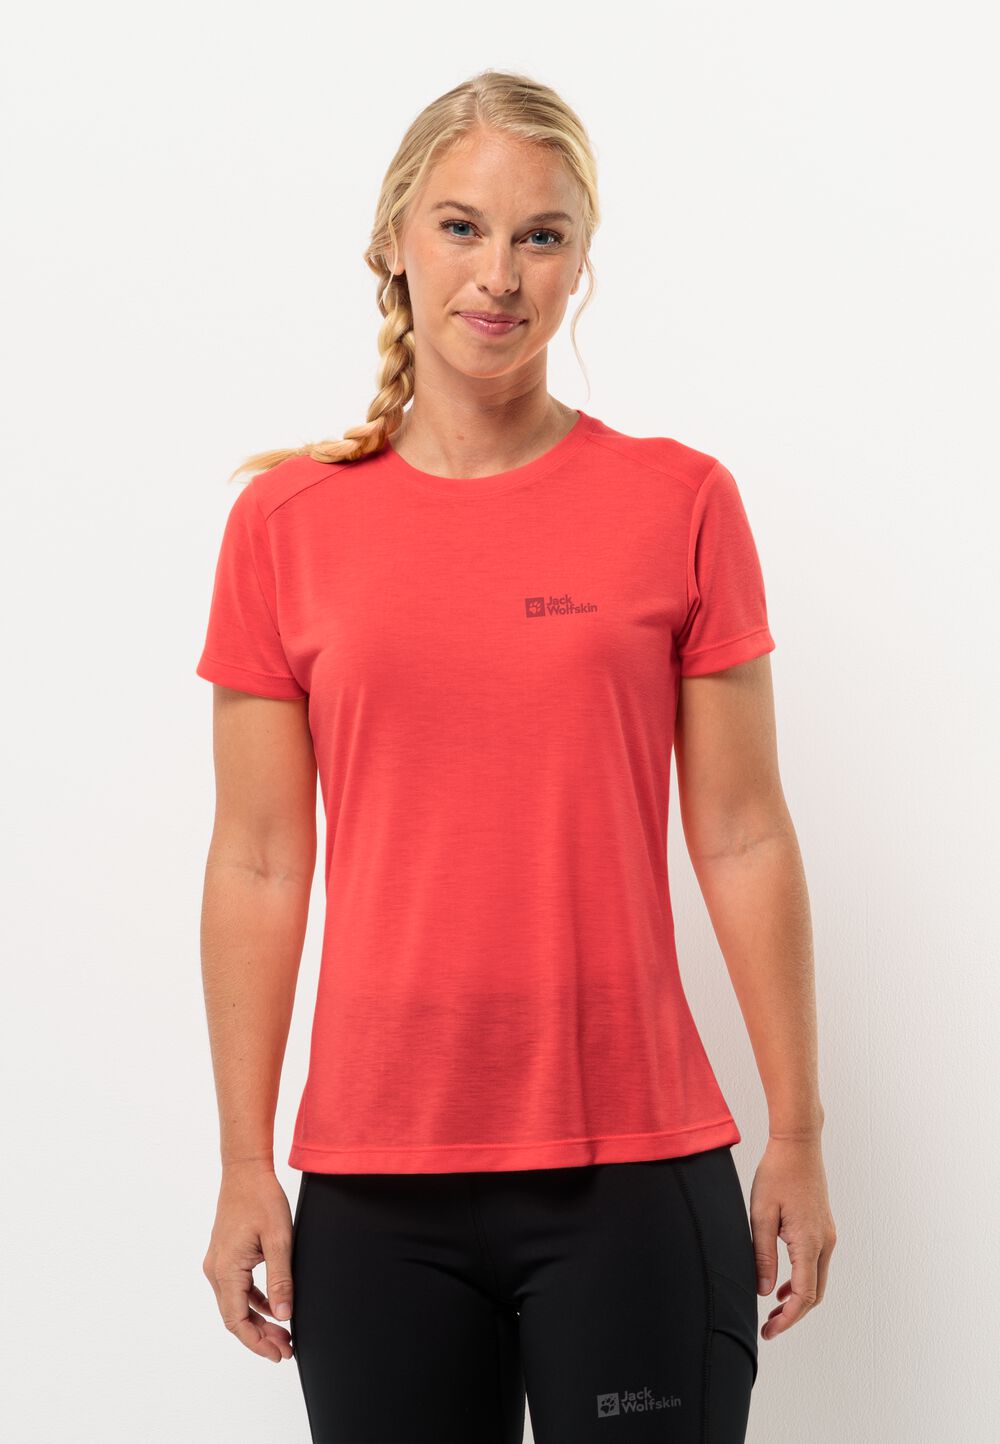 Jack Wolfskin Vonnan S S T-Shirt Women Functioneel shirt Dames XL rood vibrant red